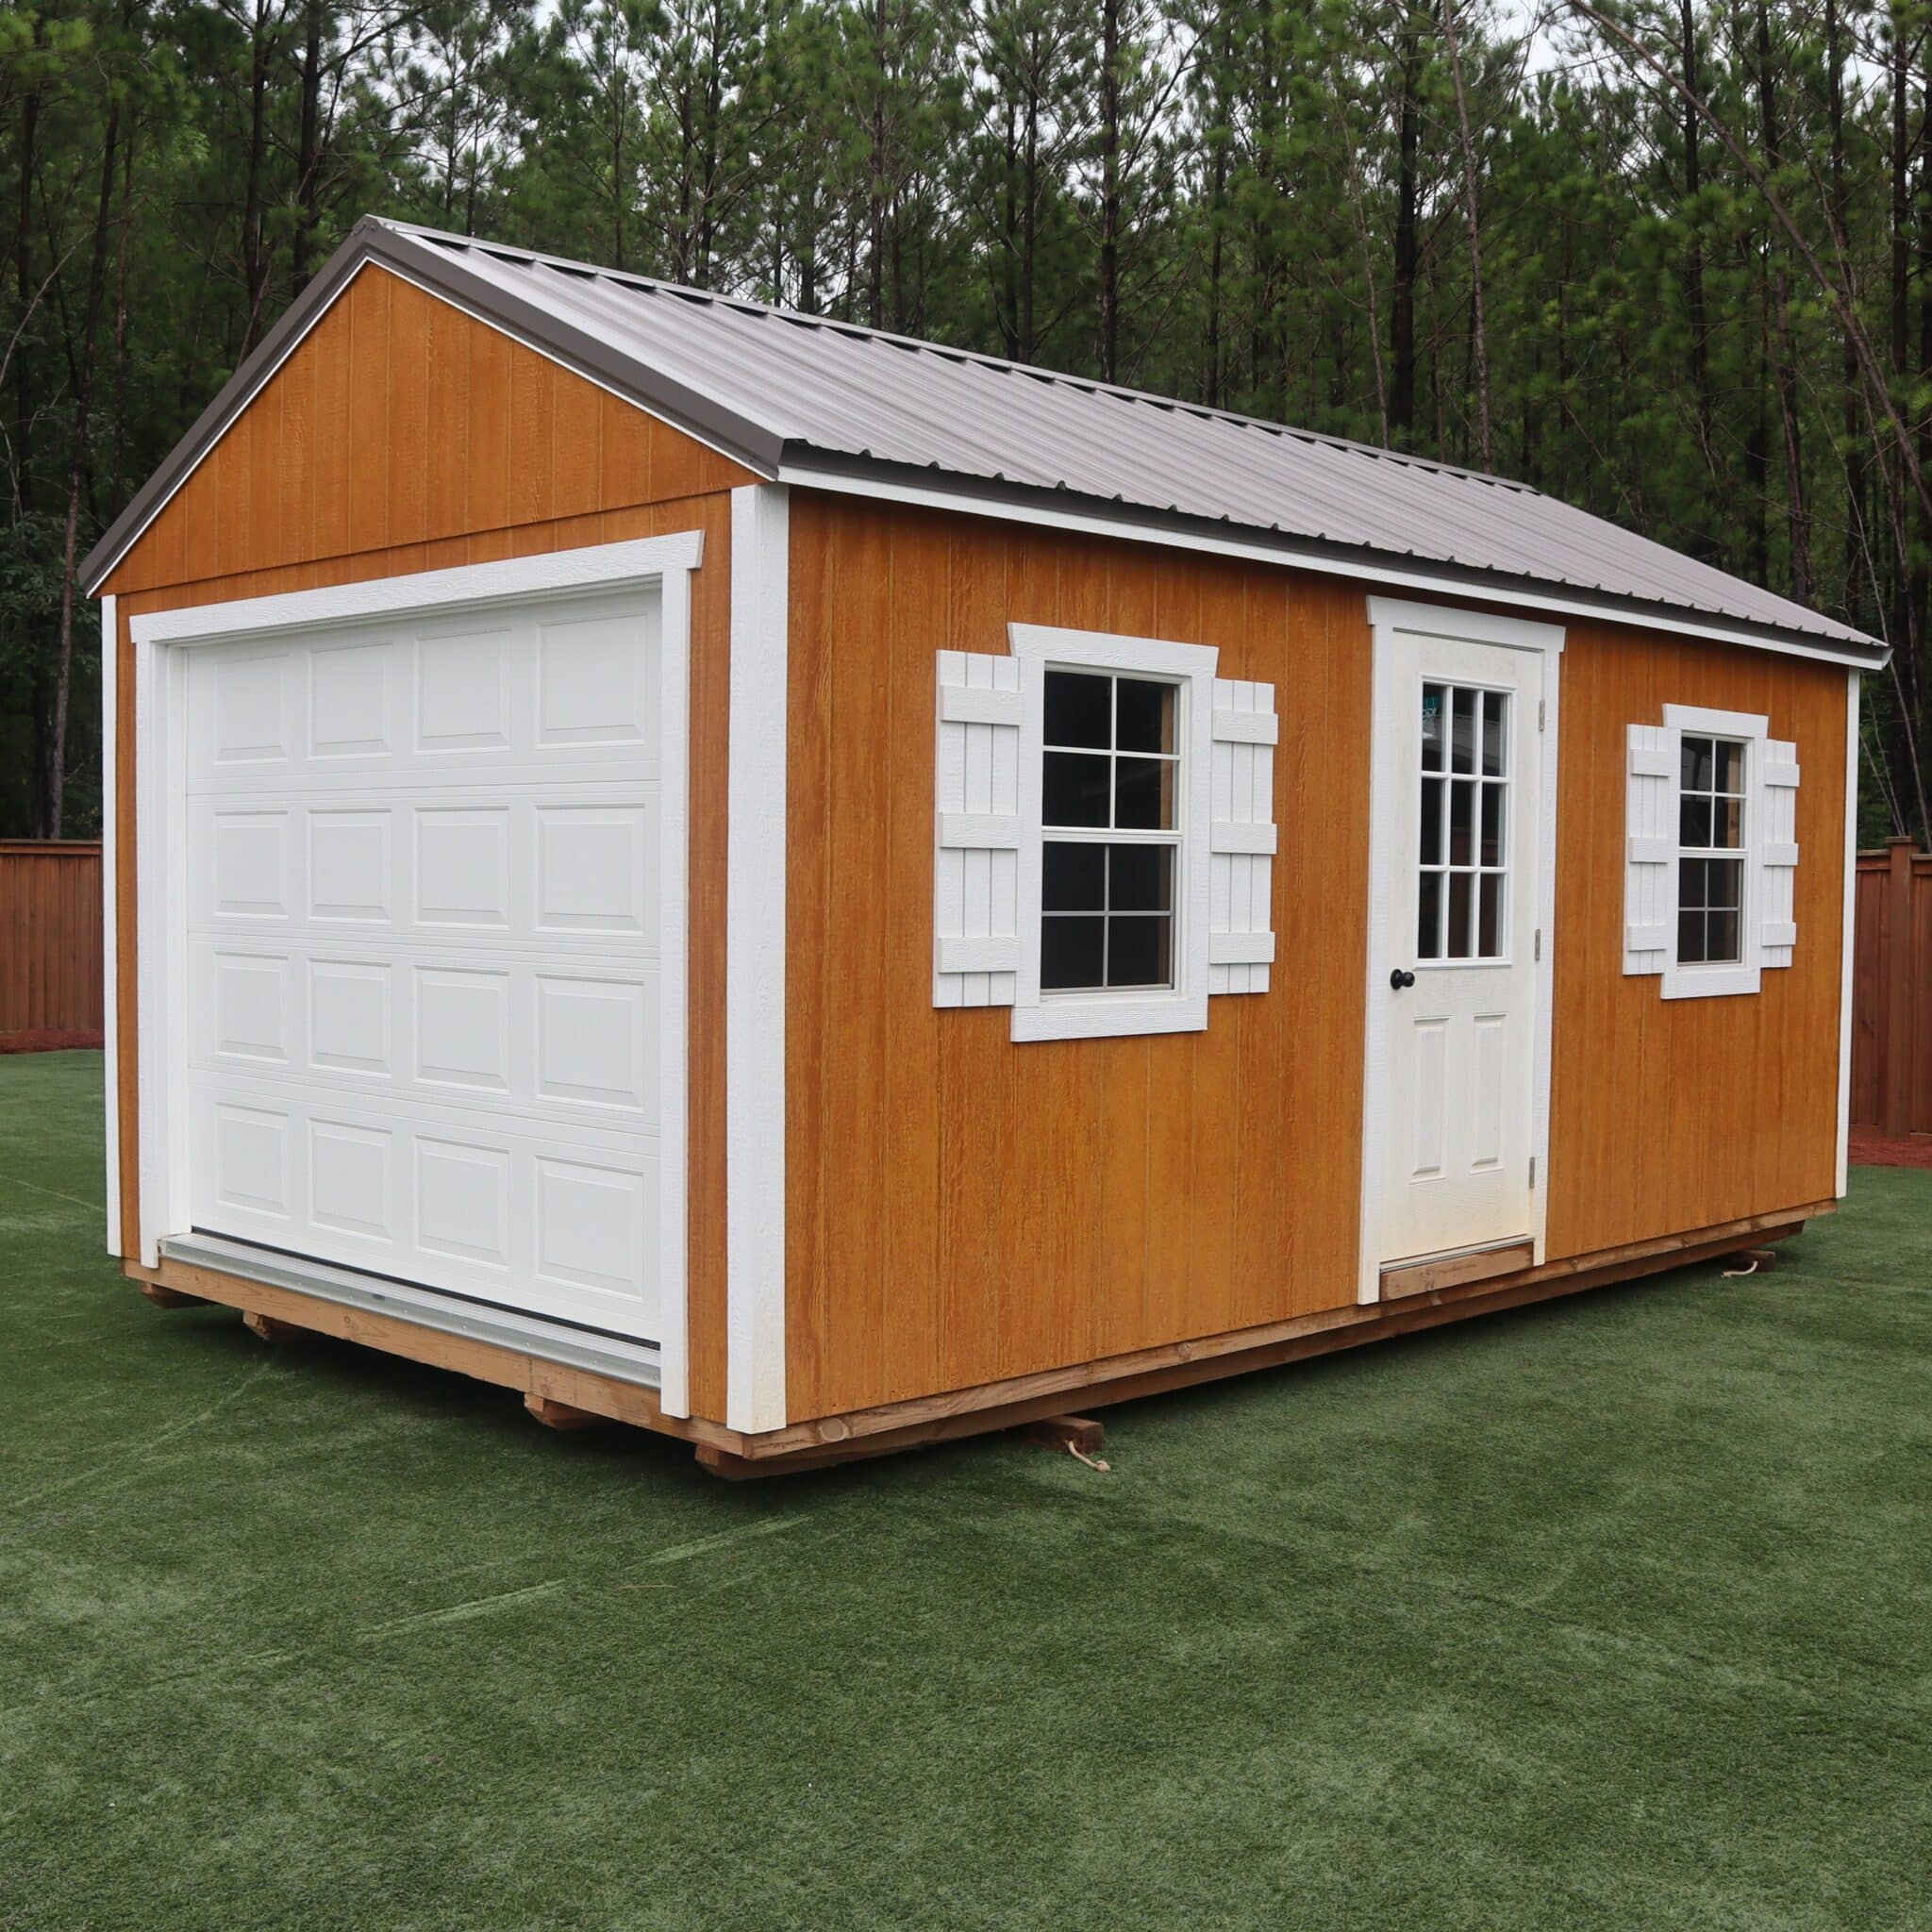 OutdoorOptions Eatonton Georgia 31024 12x20 WoodWhite Garage 5 Storage For Your Life Outdoor Options